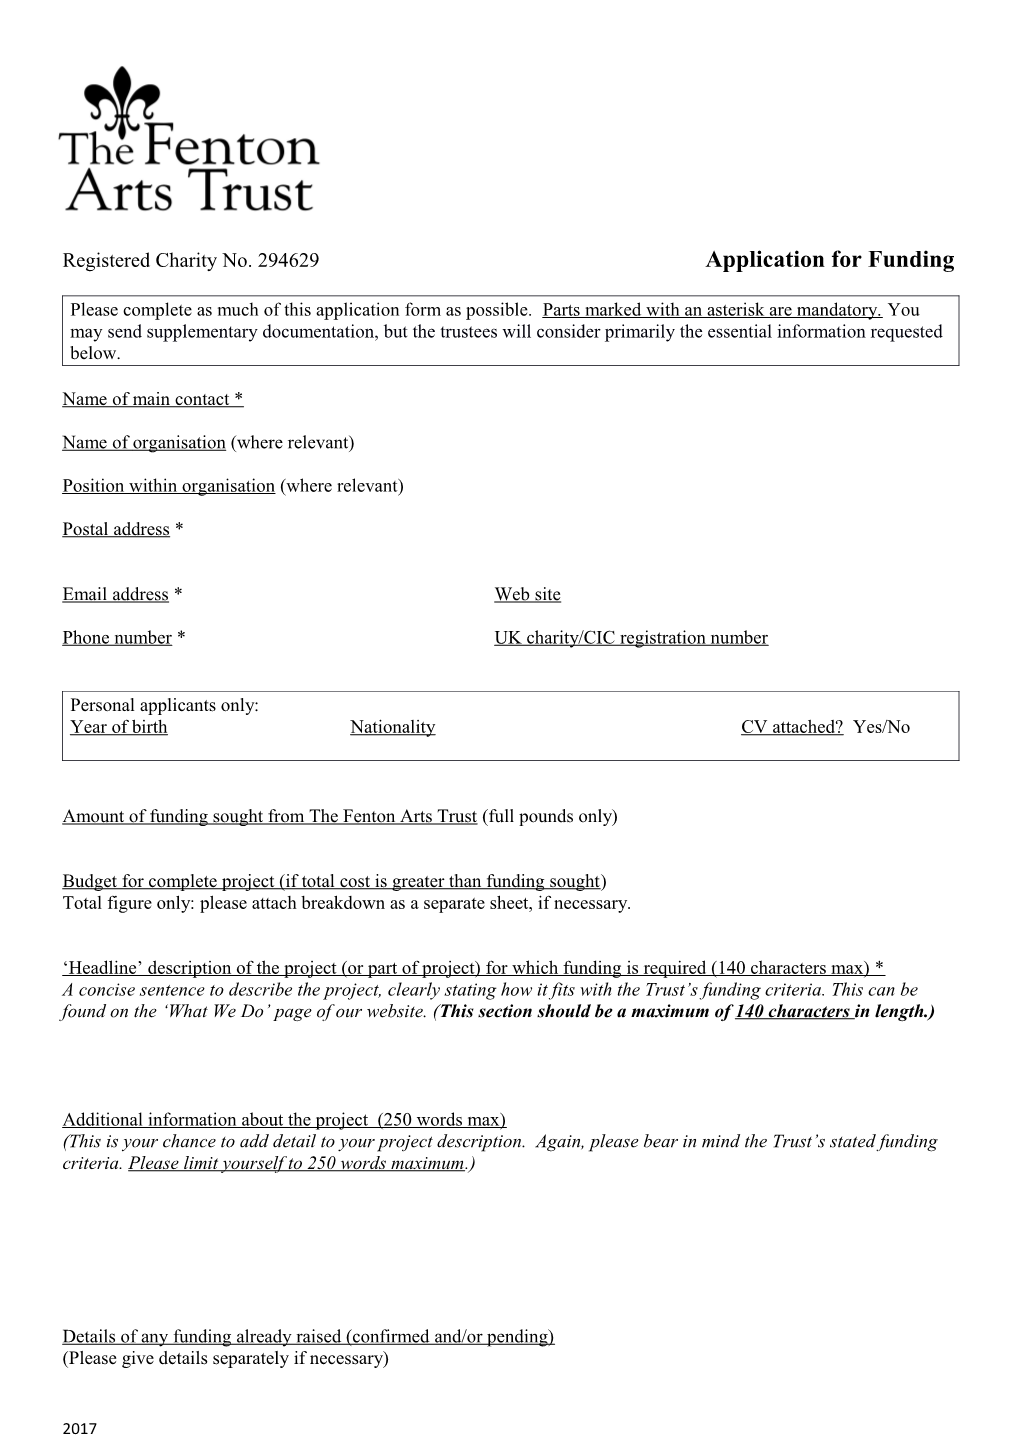 The Fenton Arts Trust Application Form